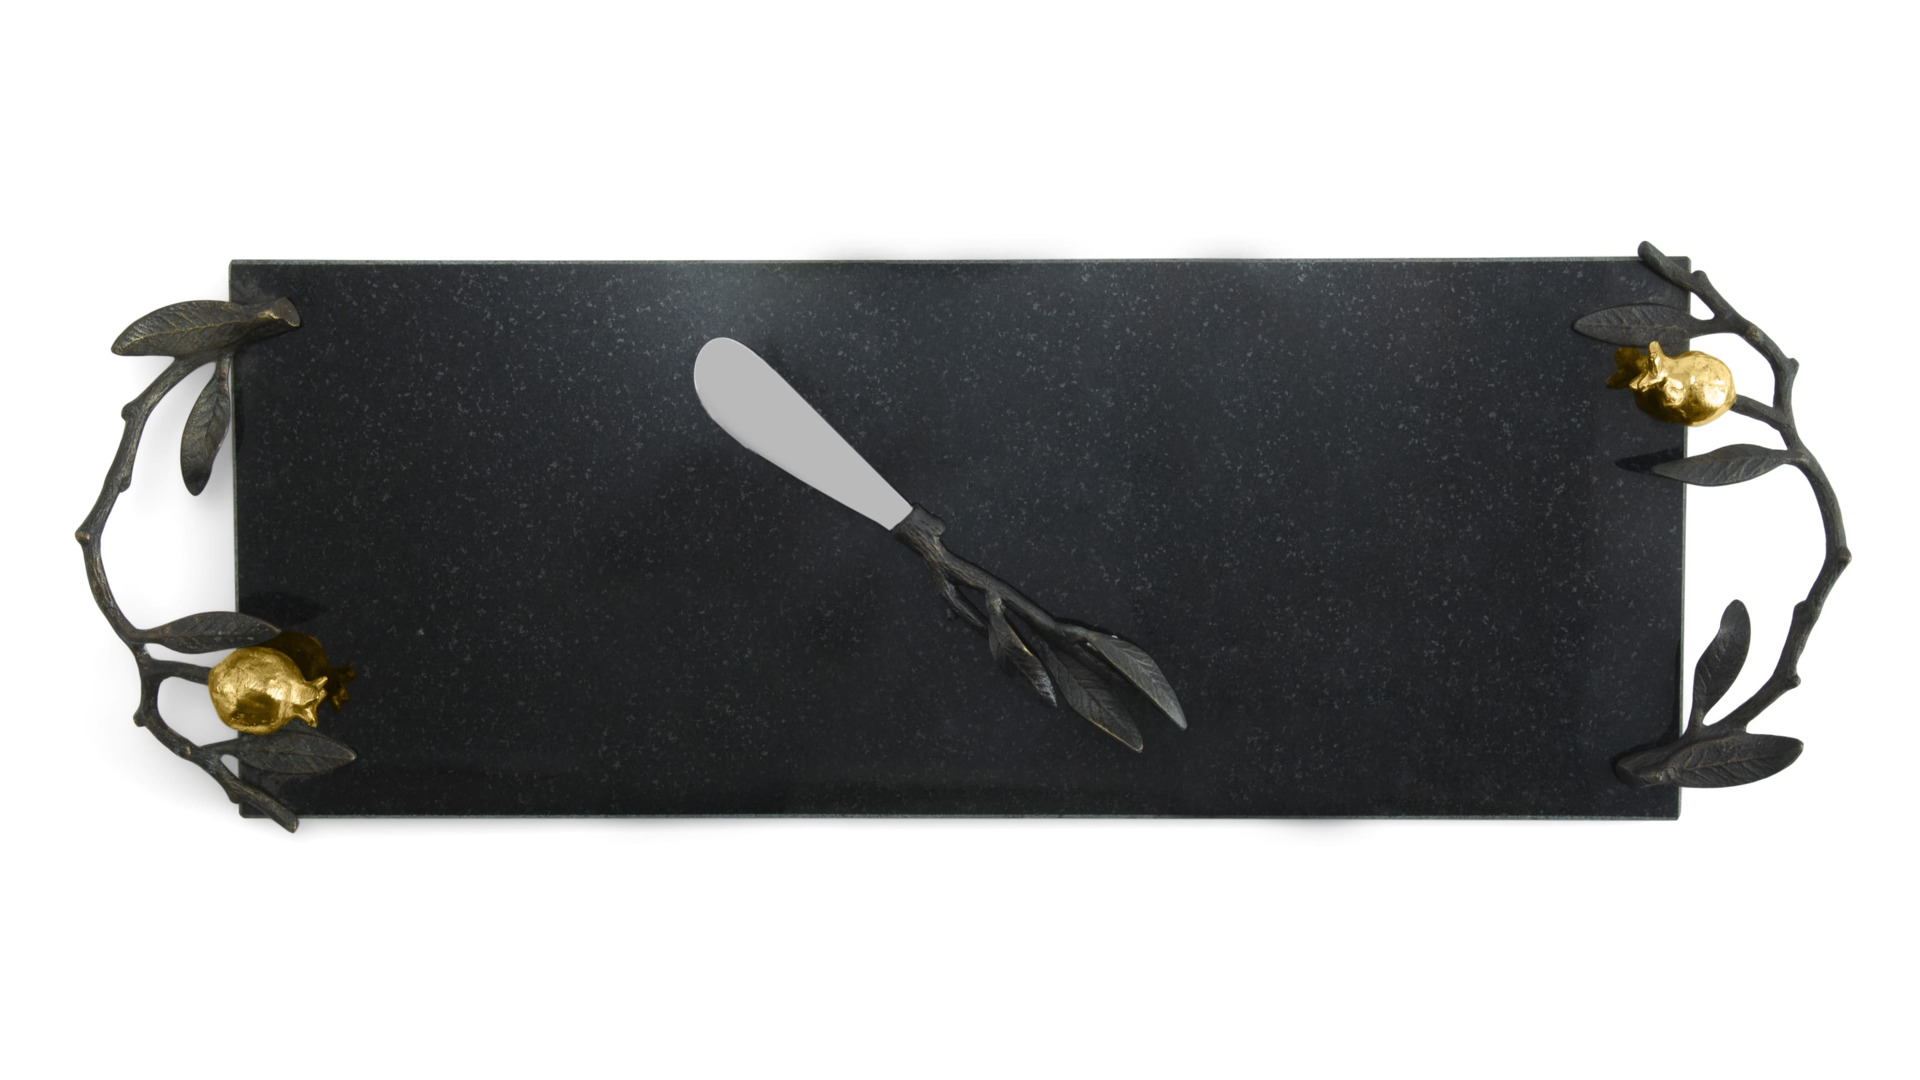 Доска для сыра с ножом Michael Aram Гранат 44х15 см, гранит